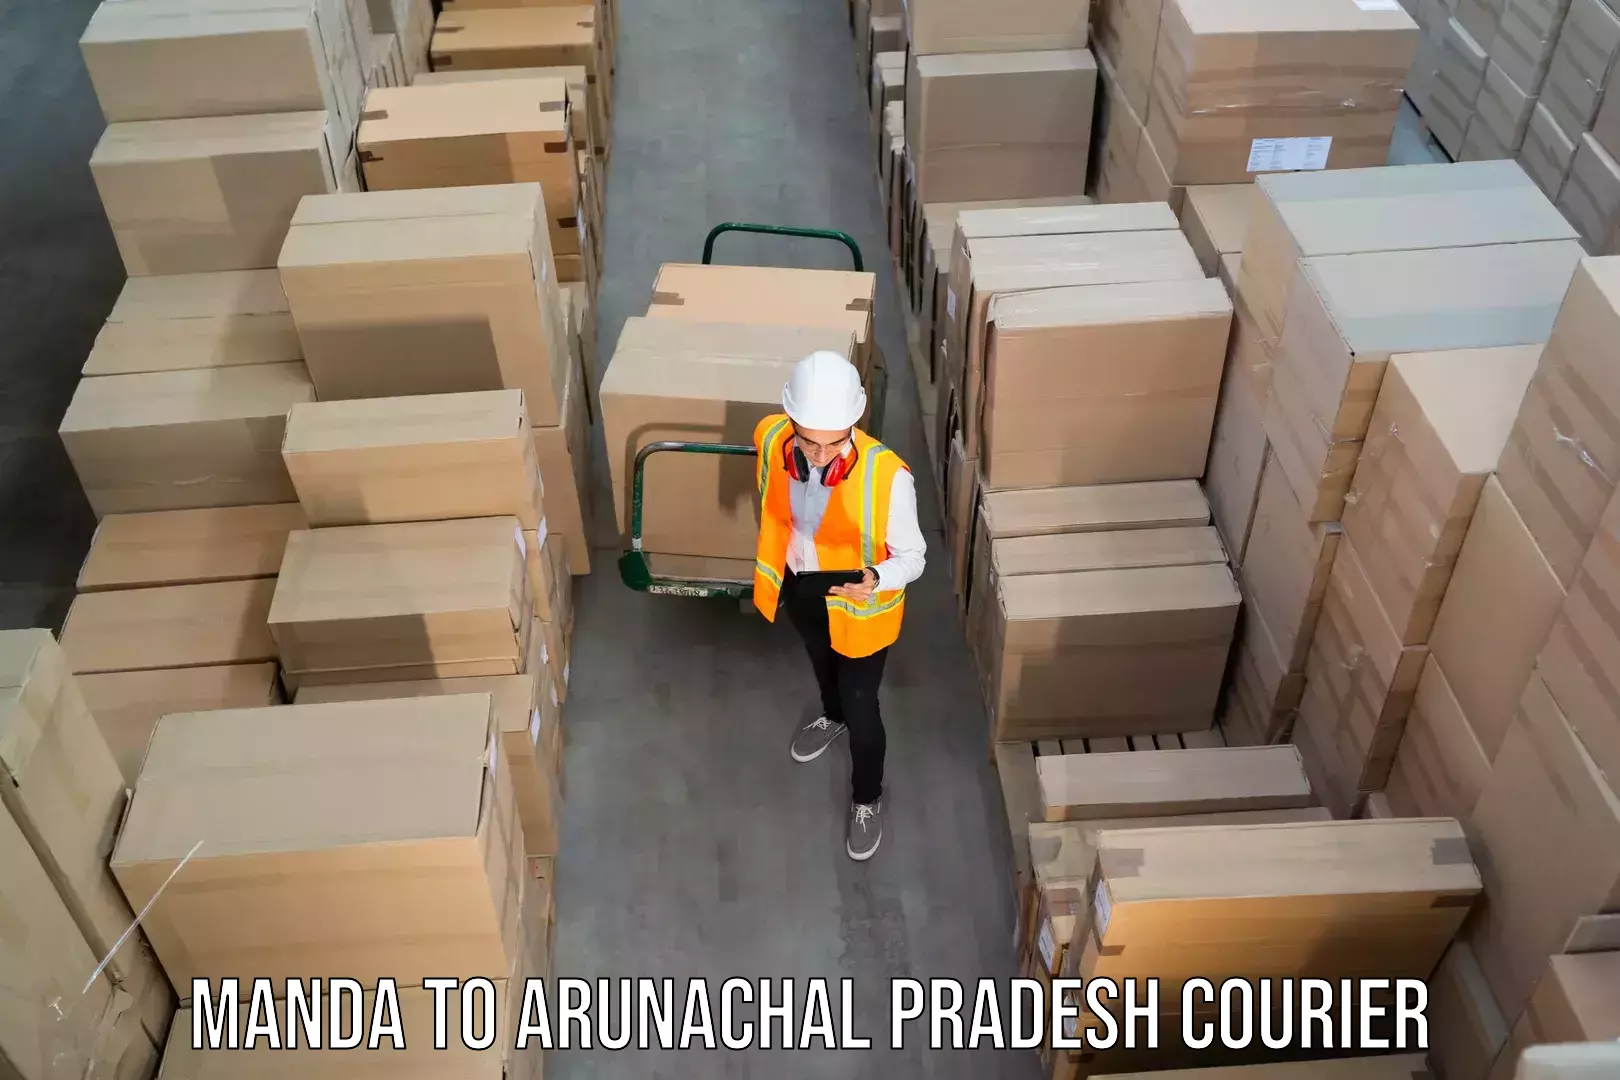 Fast delivery service Manda to Arunachal Pradesh